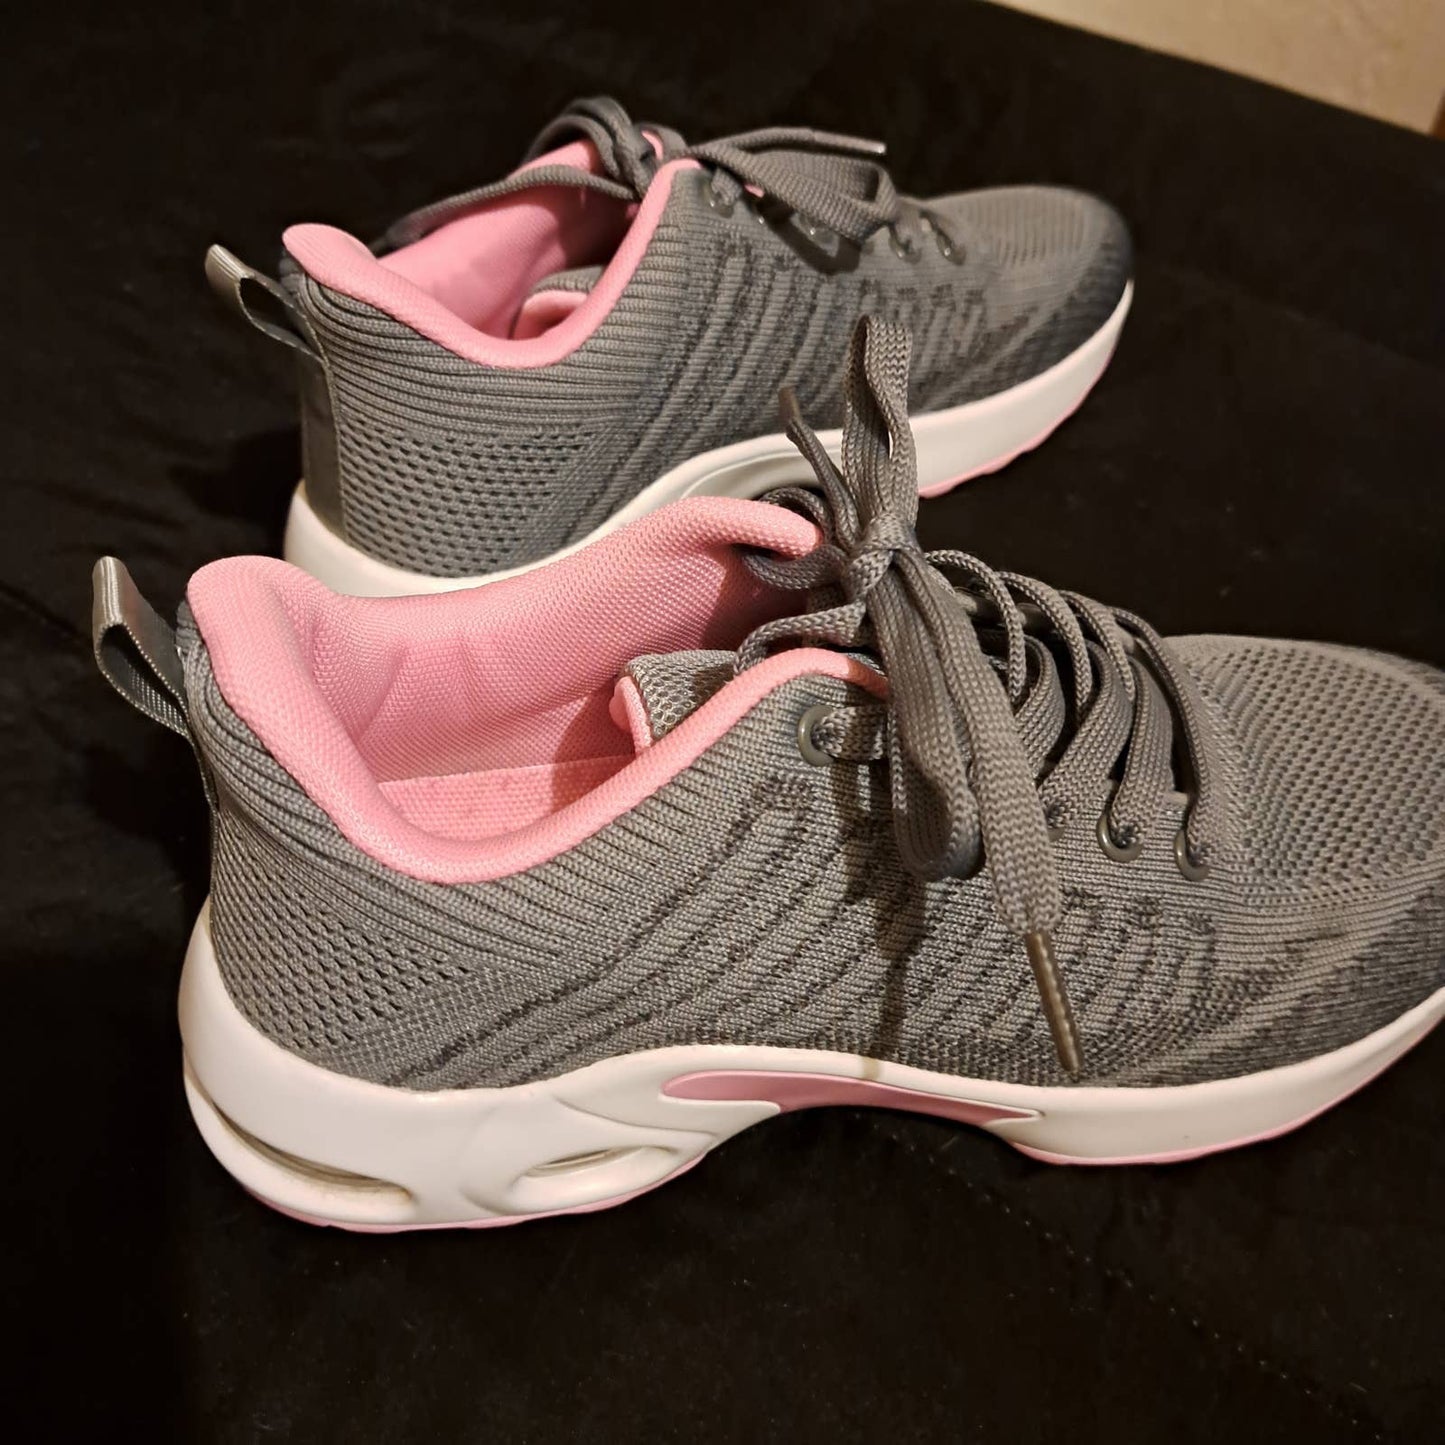 Returned Item - Mishansha Size 7 US/38 EU Pink Gray Trainers